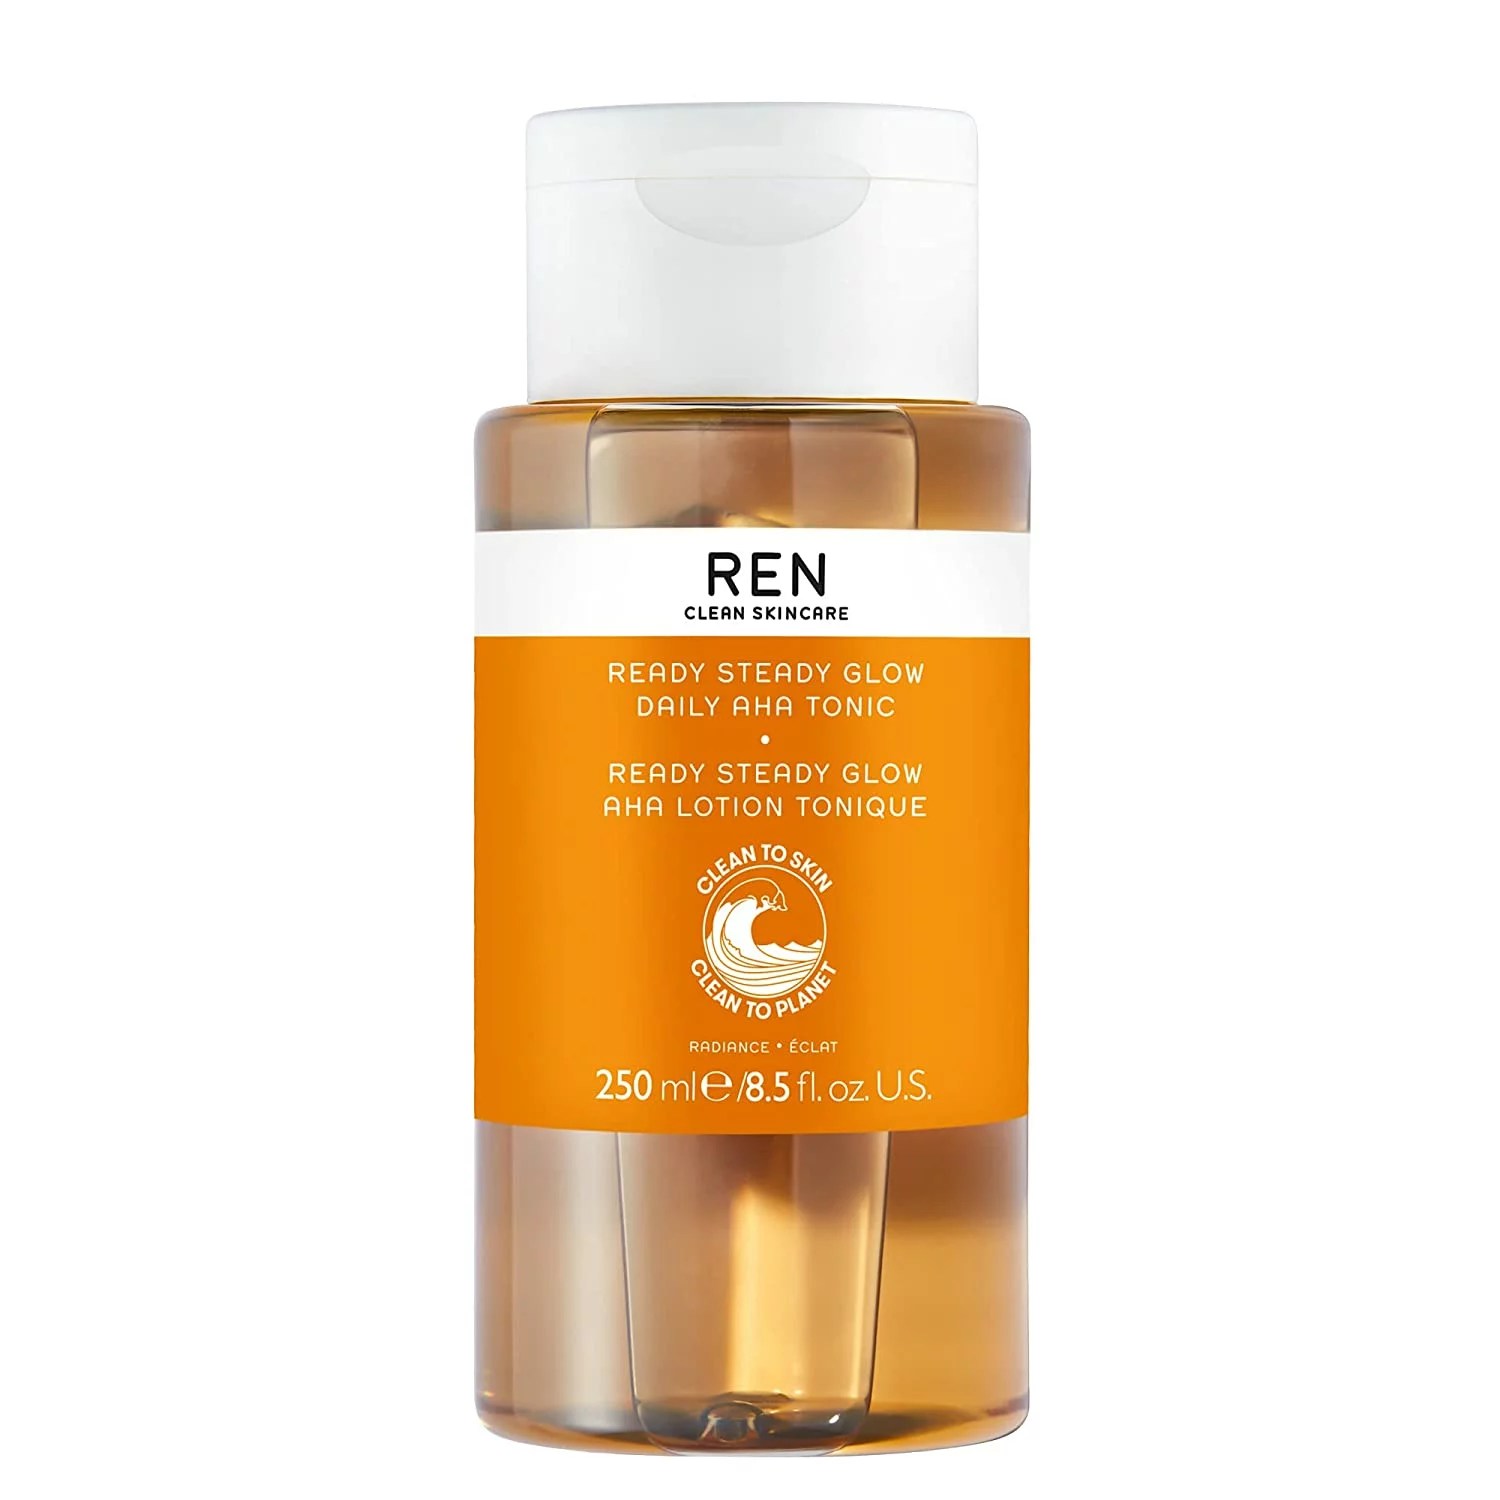 A bottle of ren ready steady glow tonic exfoliator for sensitive skin